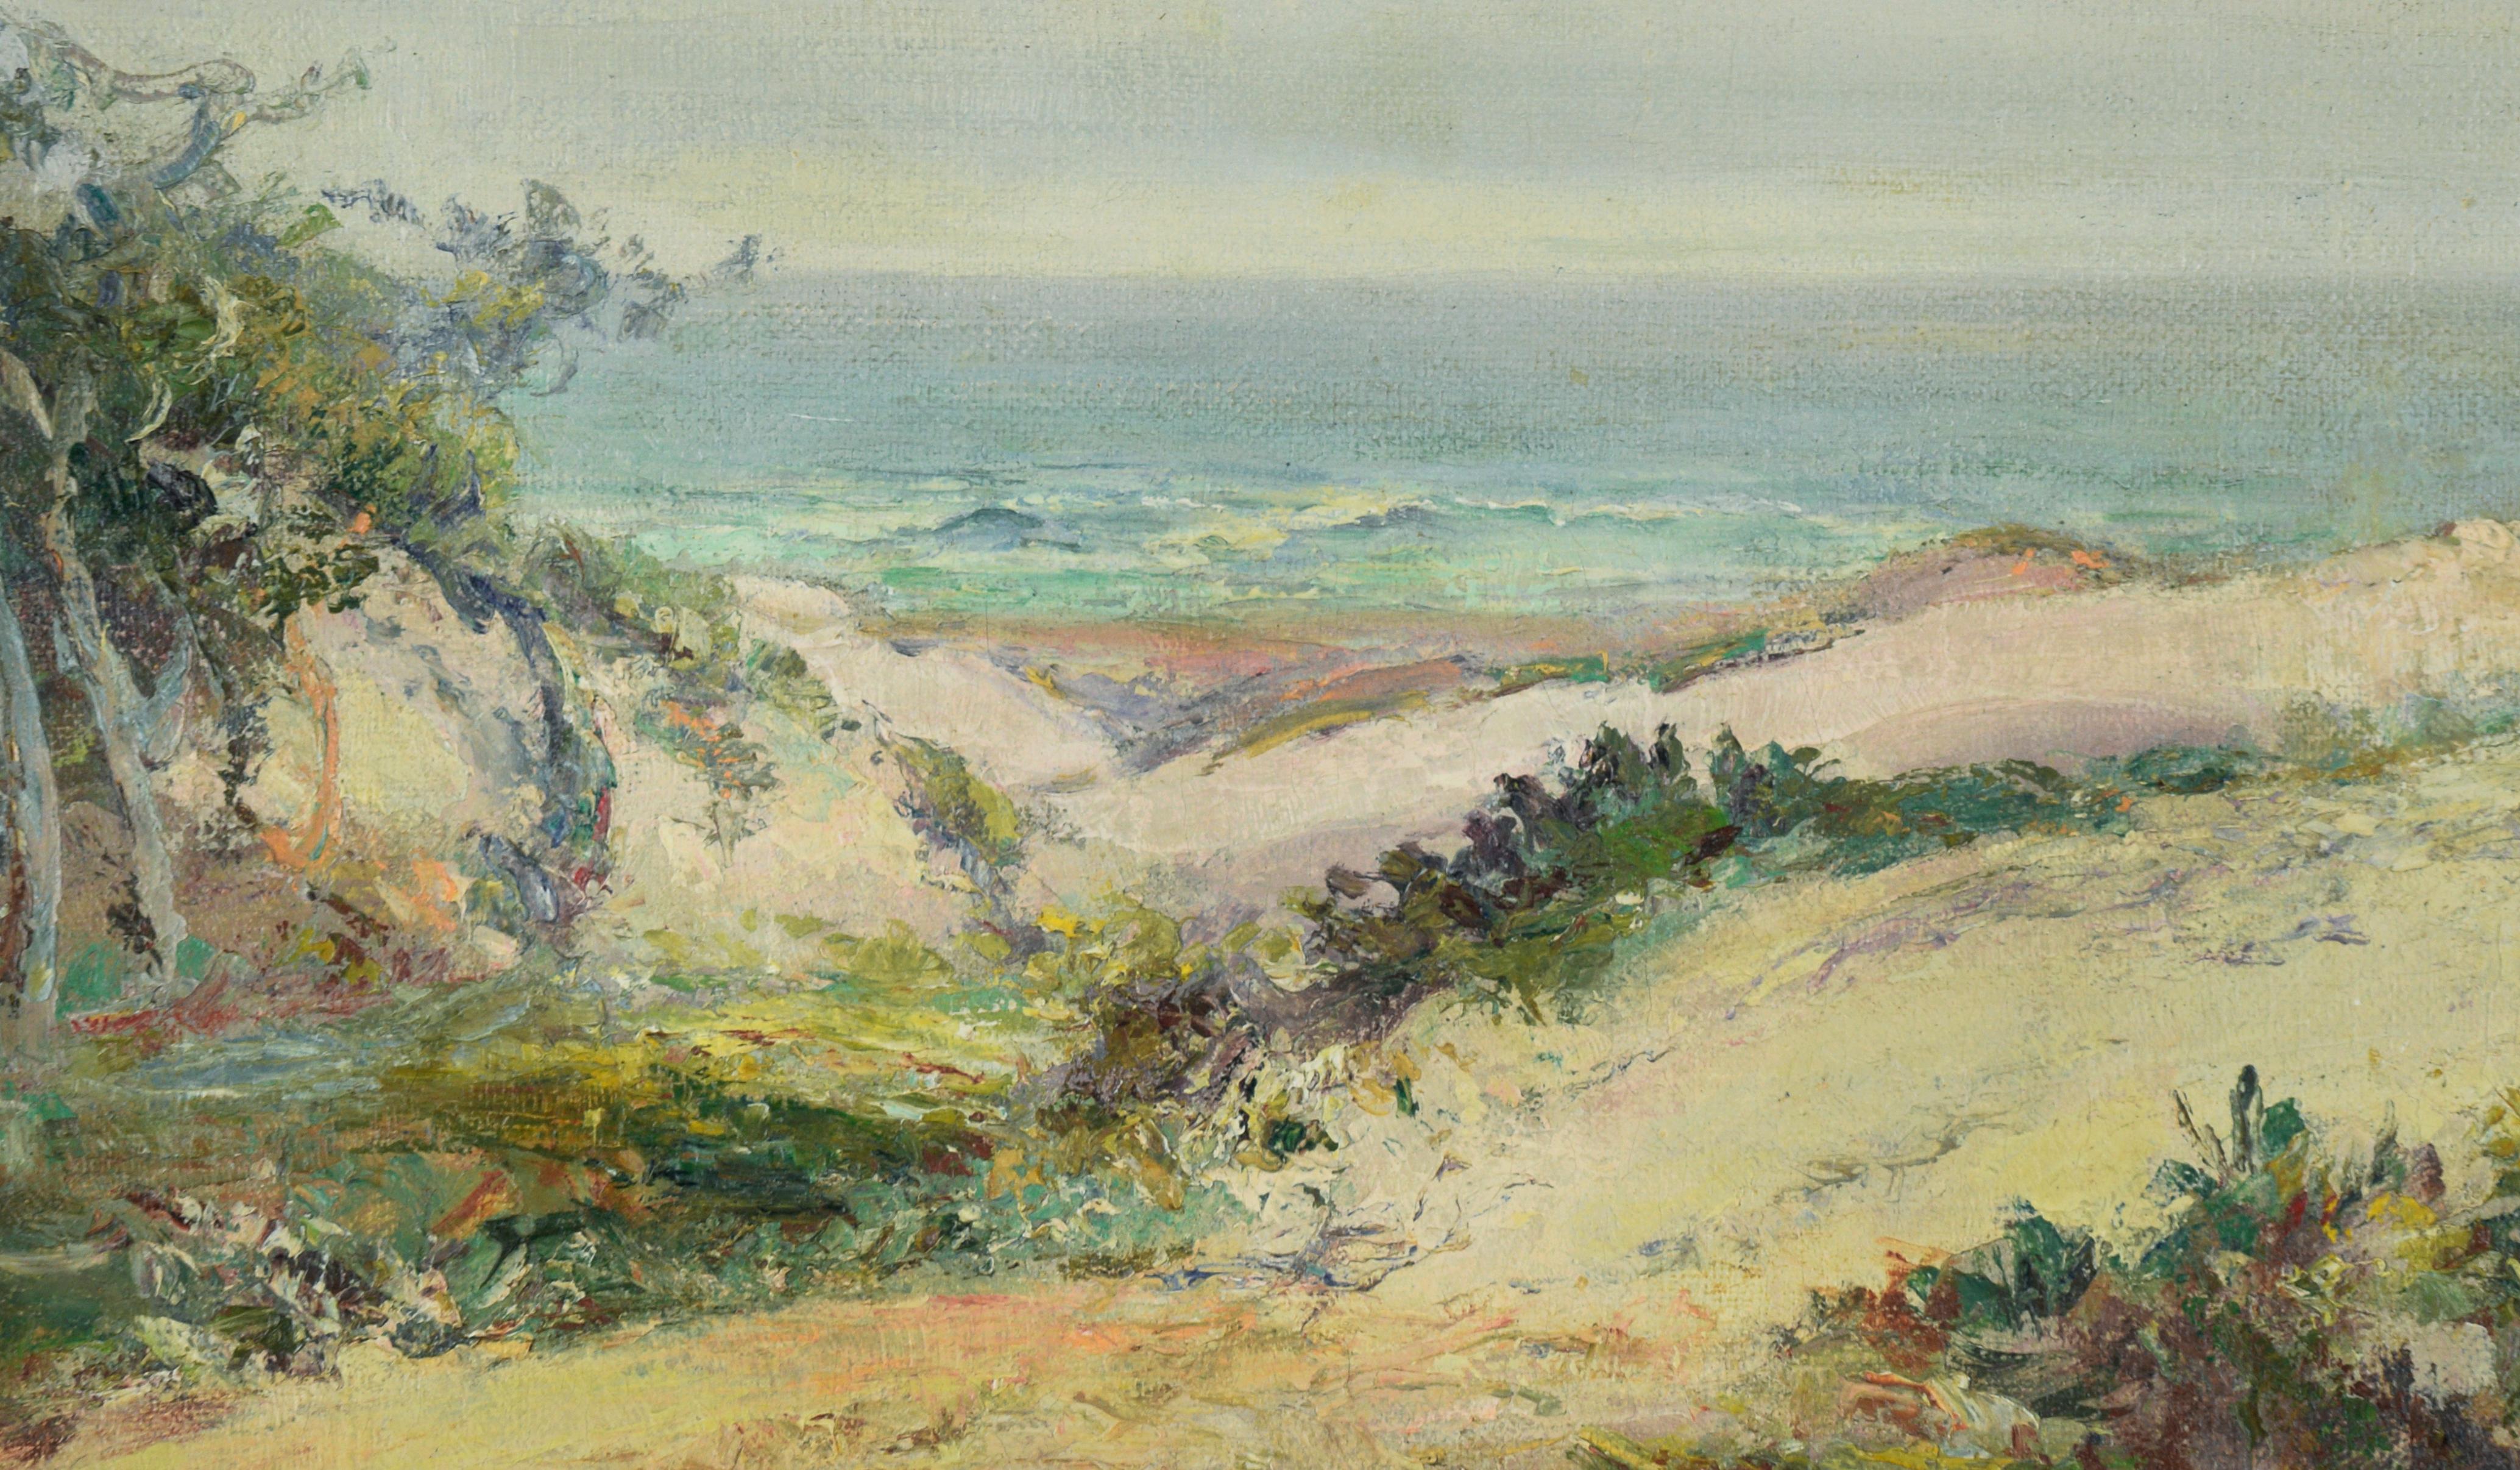 1927 Carmel by the Sea - Beach, California Coastline - Oil on Linen - Painting by Charles Harmon